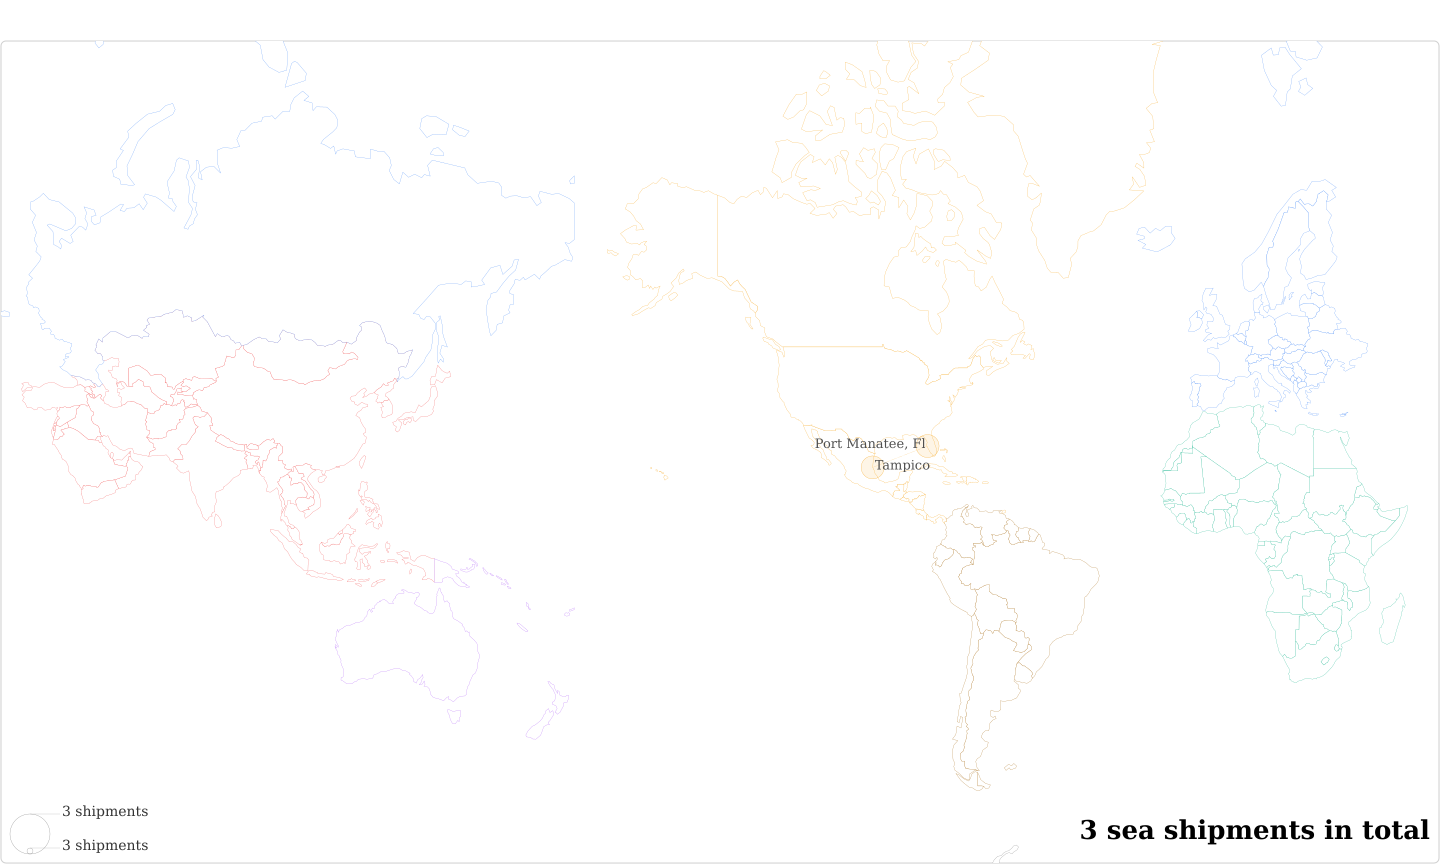 Zinc International Rfc's Imports Per Country Map